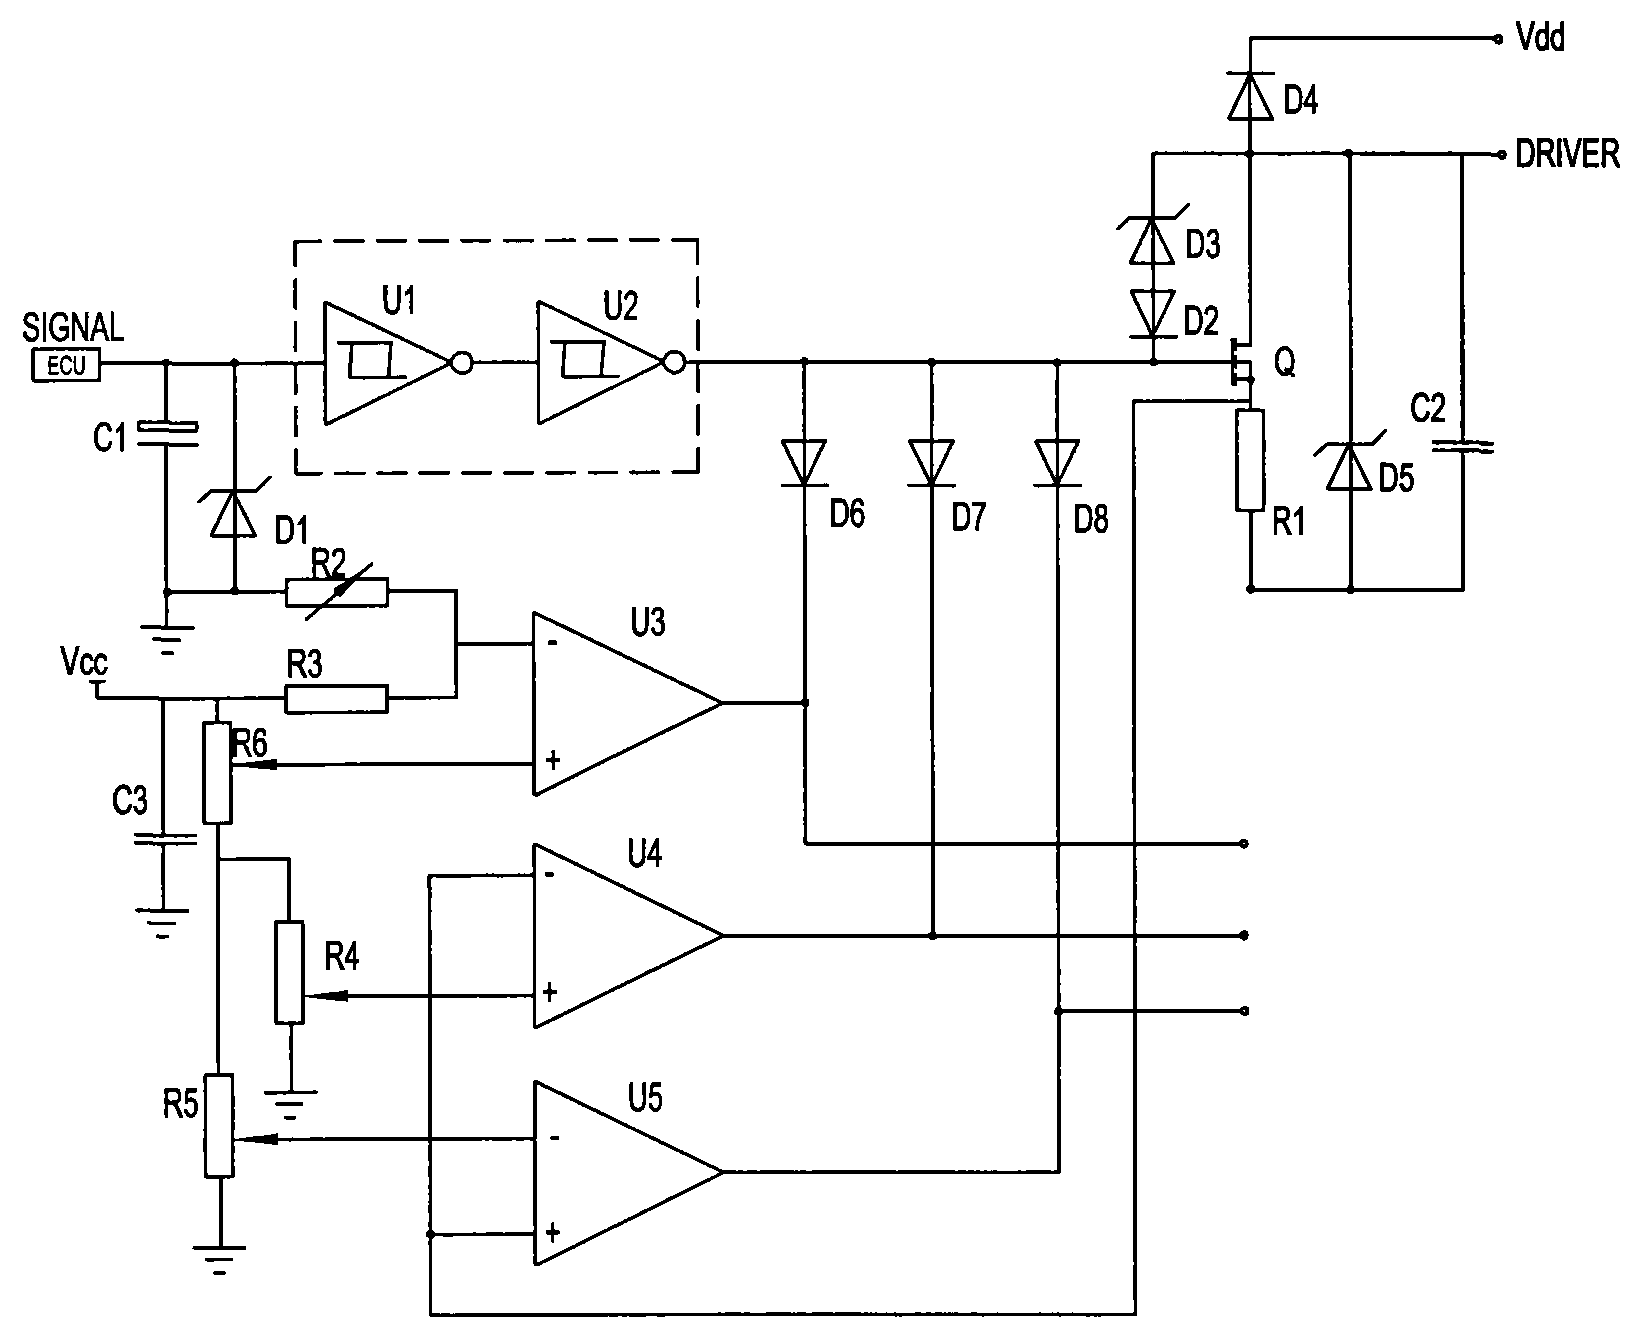 Oil pump controller